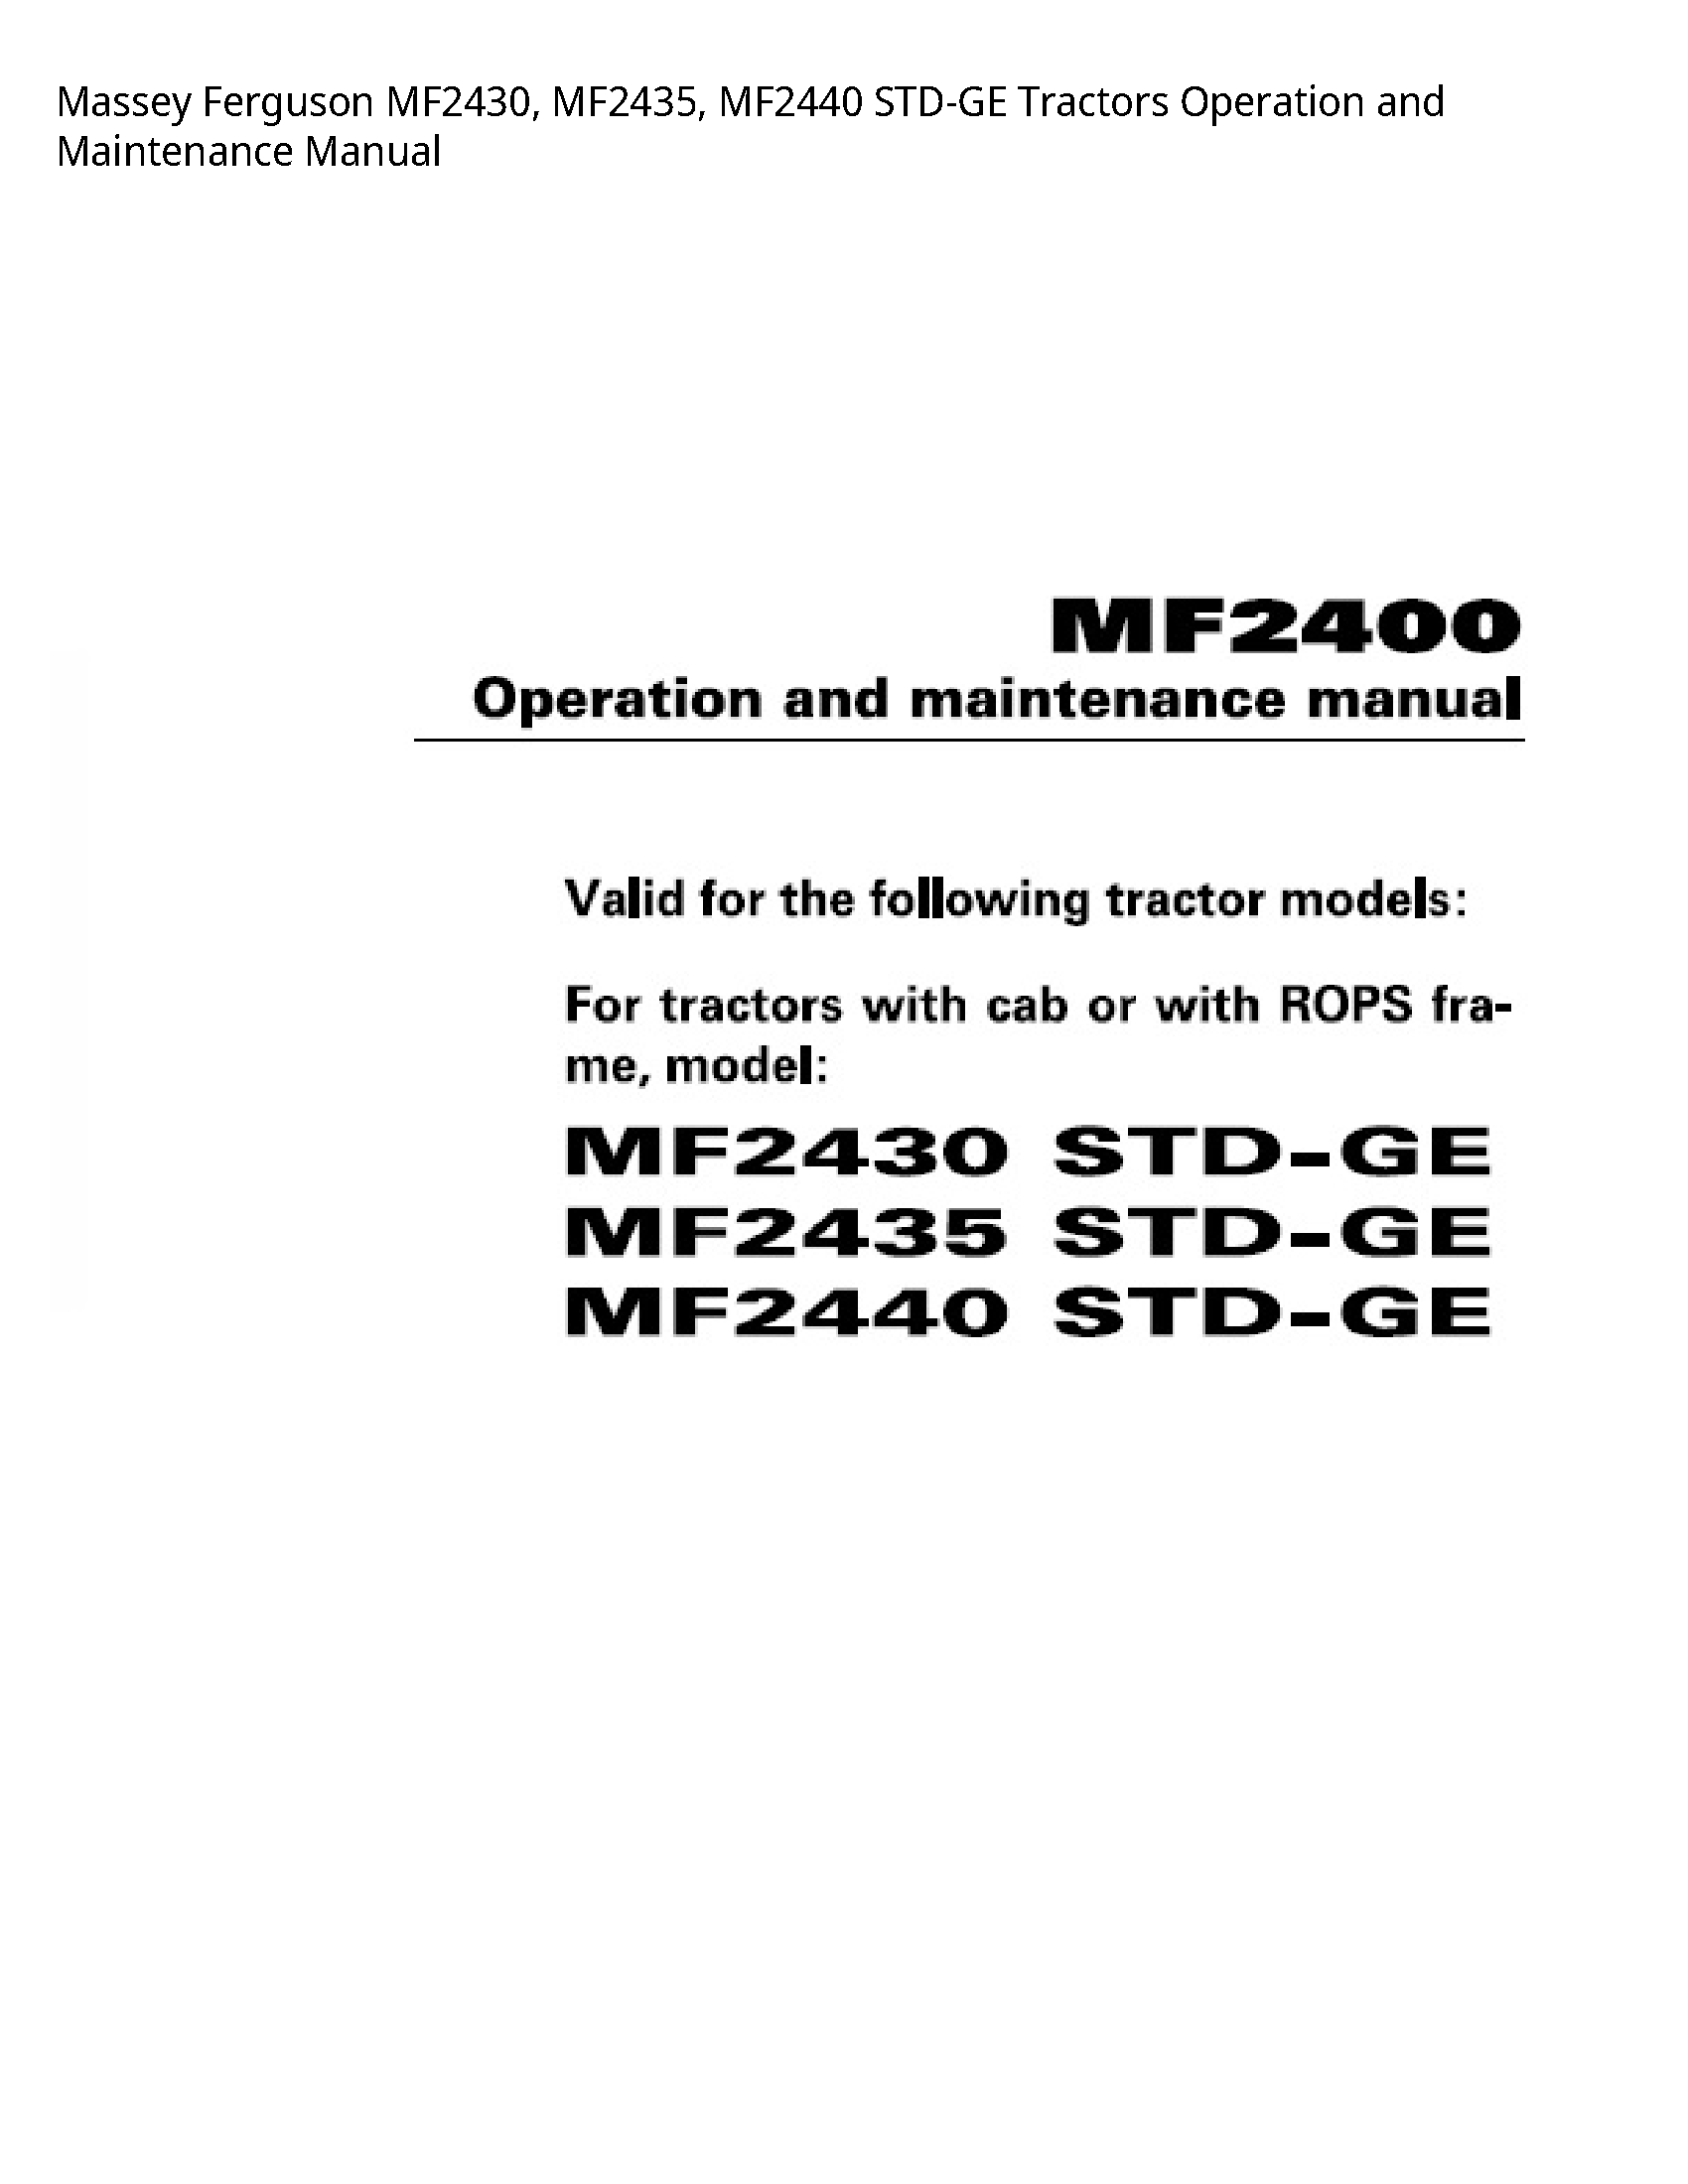 Massey Ferguson MF2430 STD-GE Tractors Operation  Maintenance manual